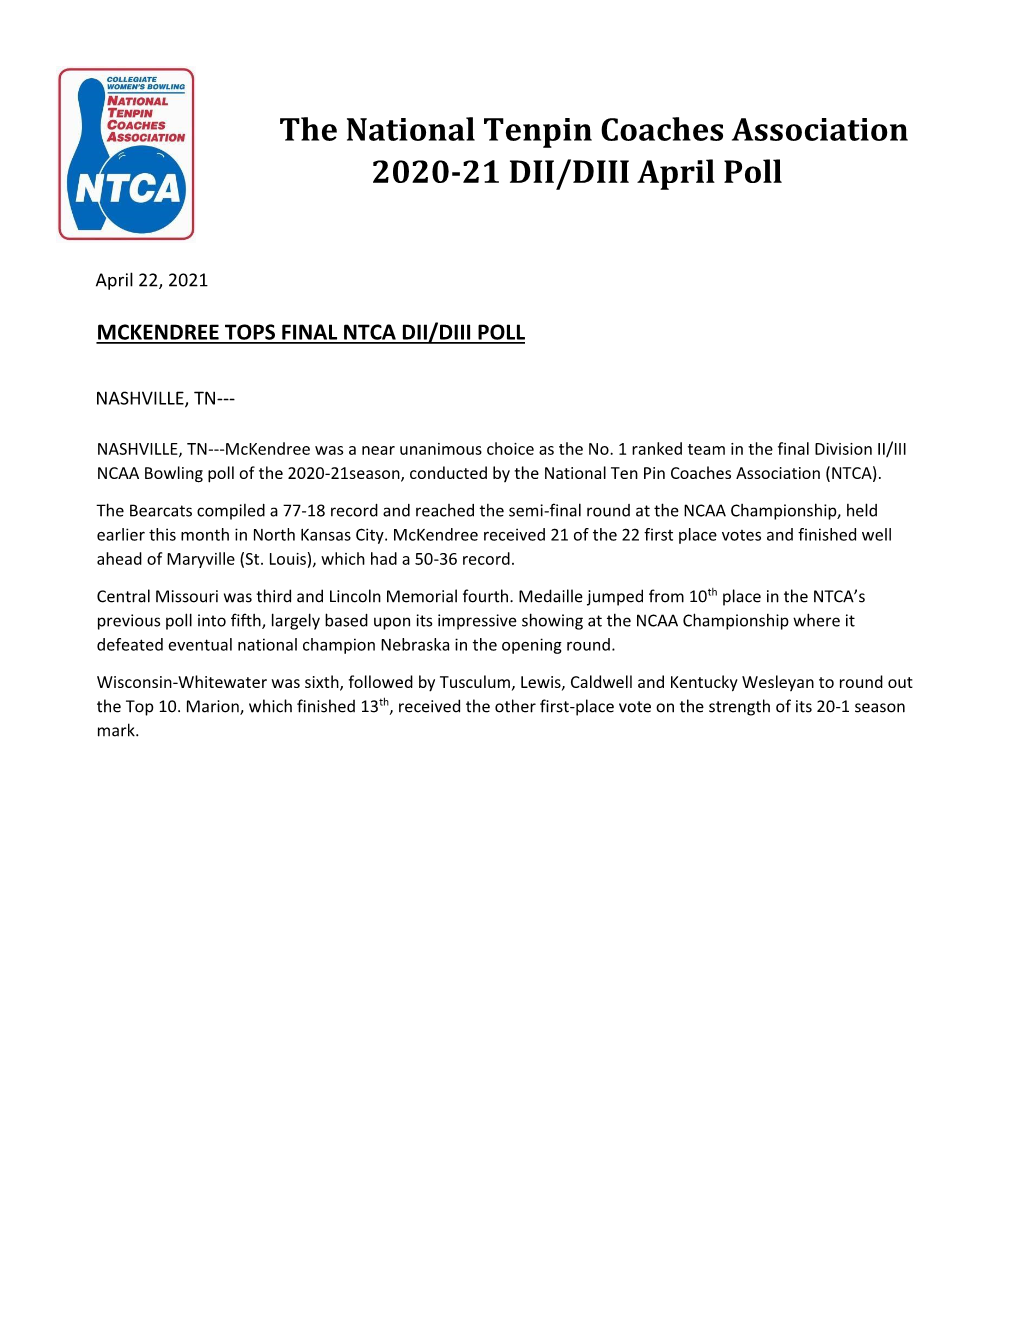 The National Tenpin Coaches Association 2020-21 DII/DIII April Poll